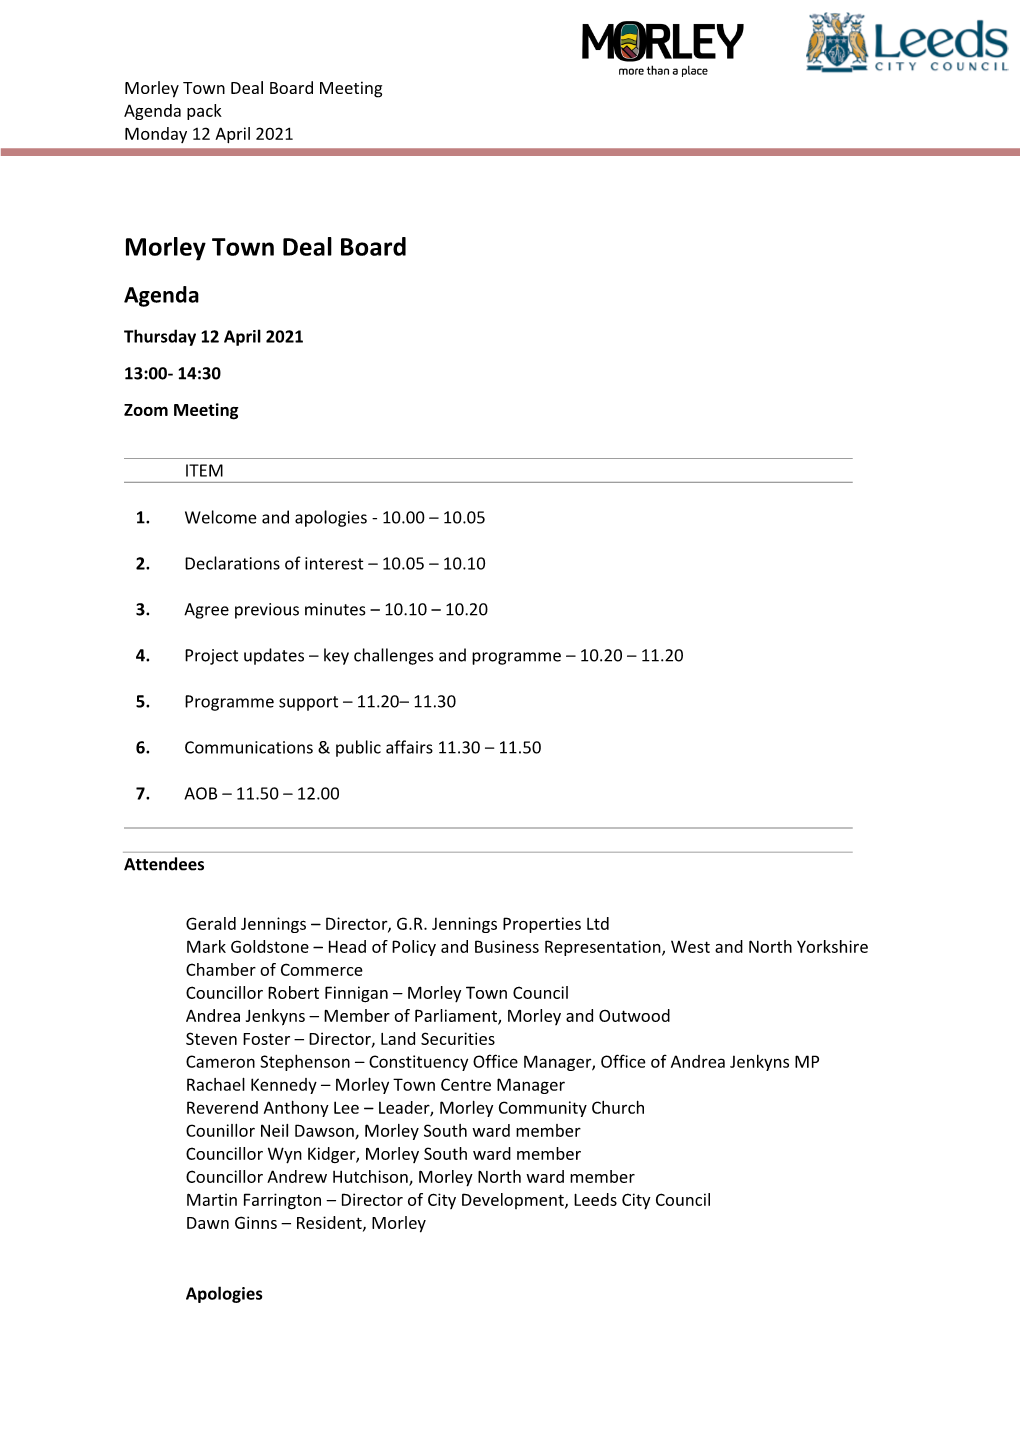 Agenda Morley Town Deal Board 12 April 2021